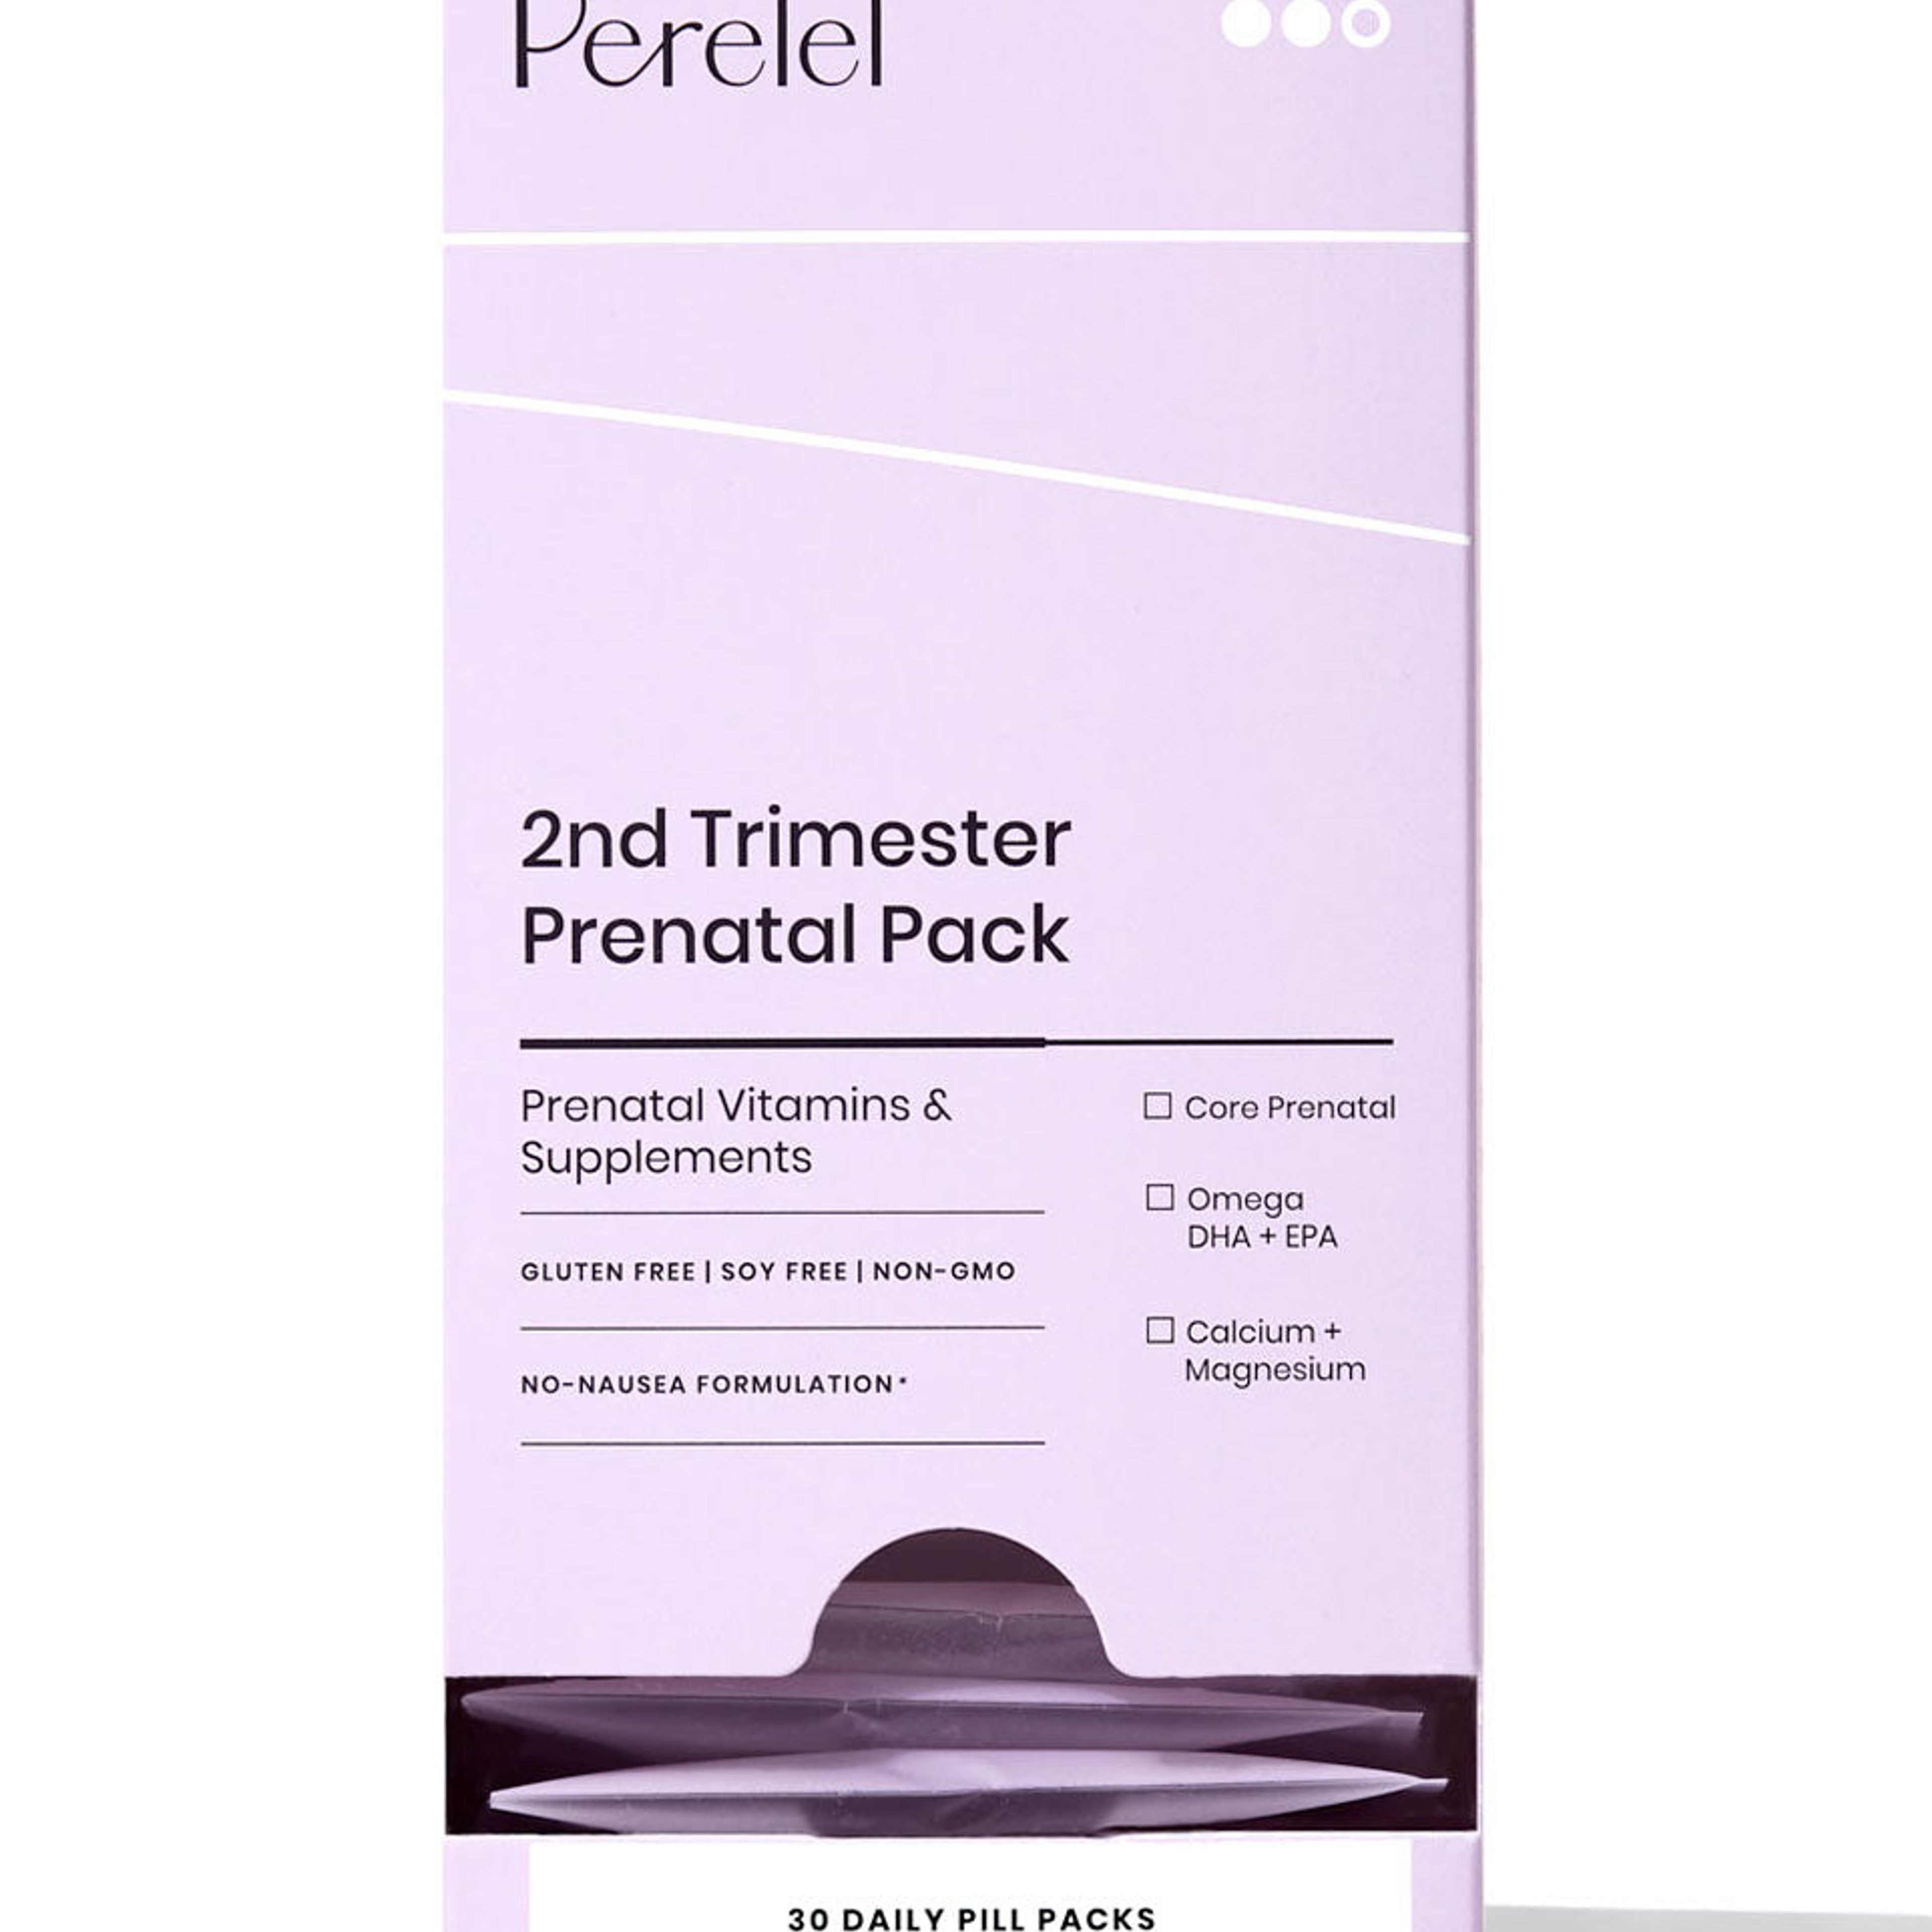 2nd Trimester Prenatal Pack